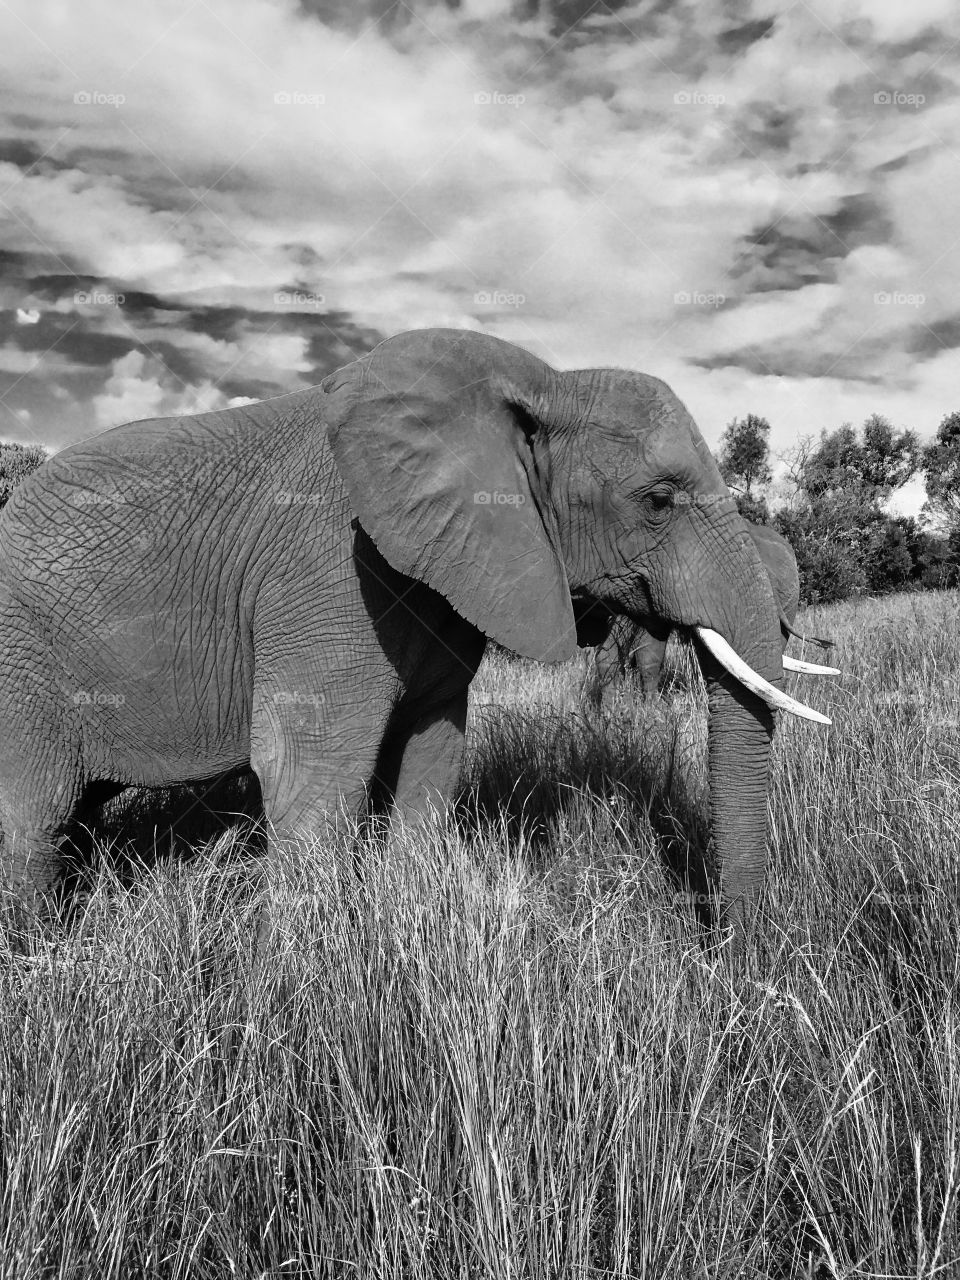 African Elephant 